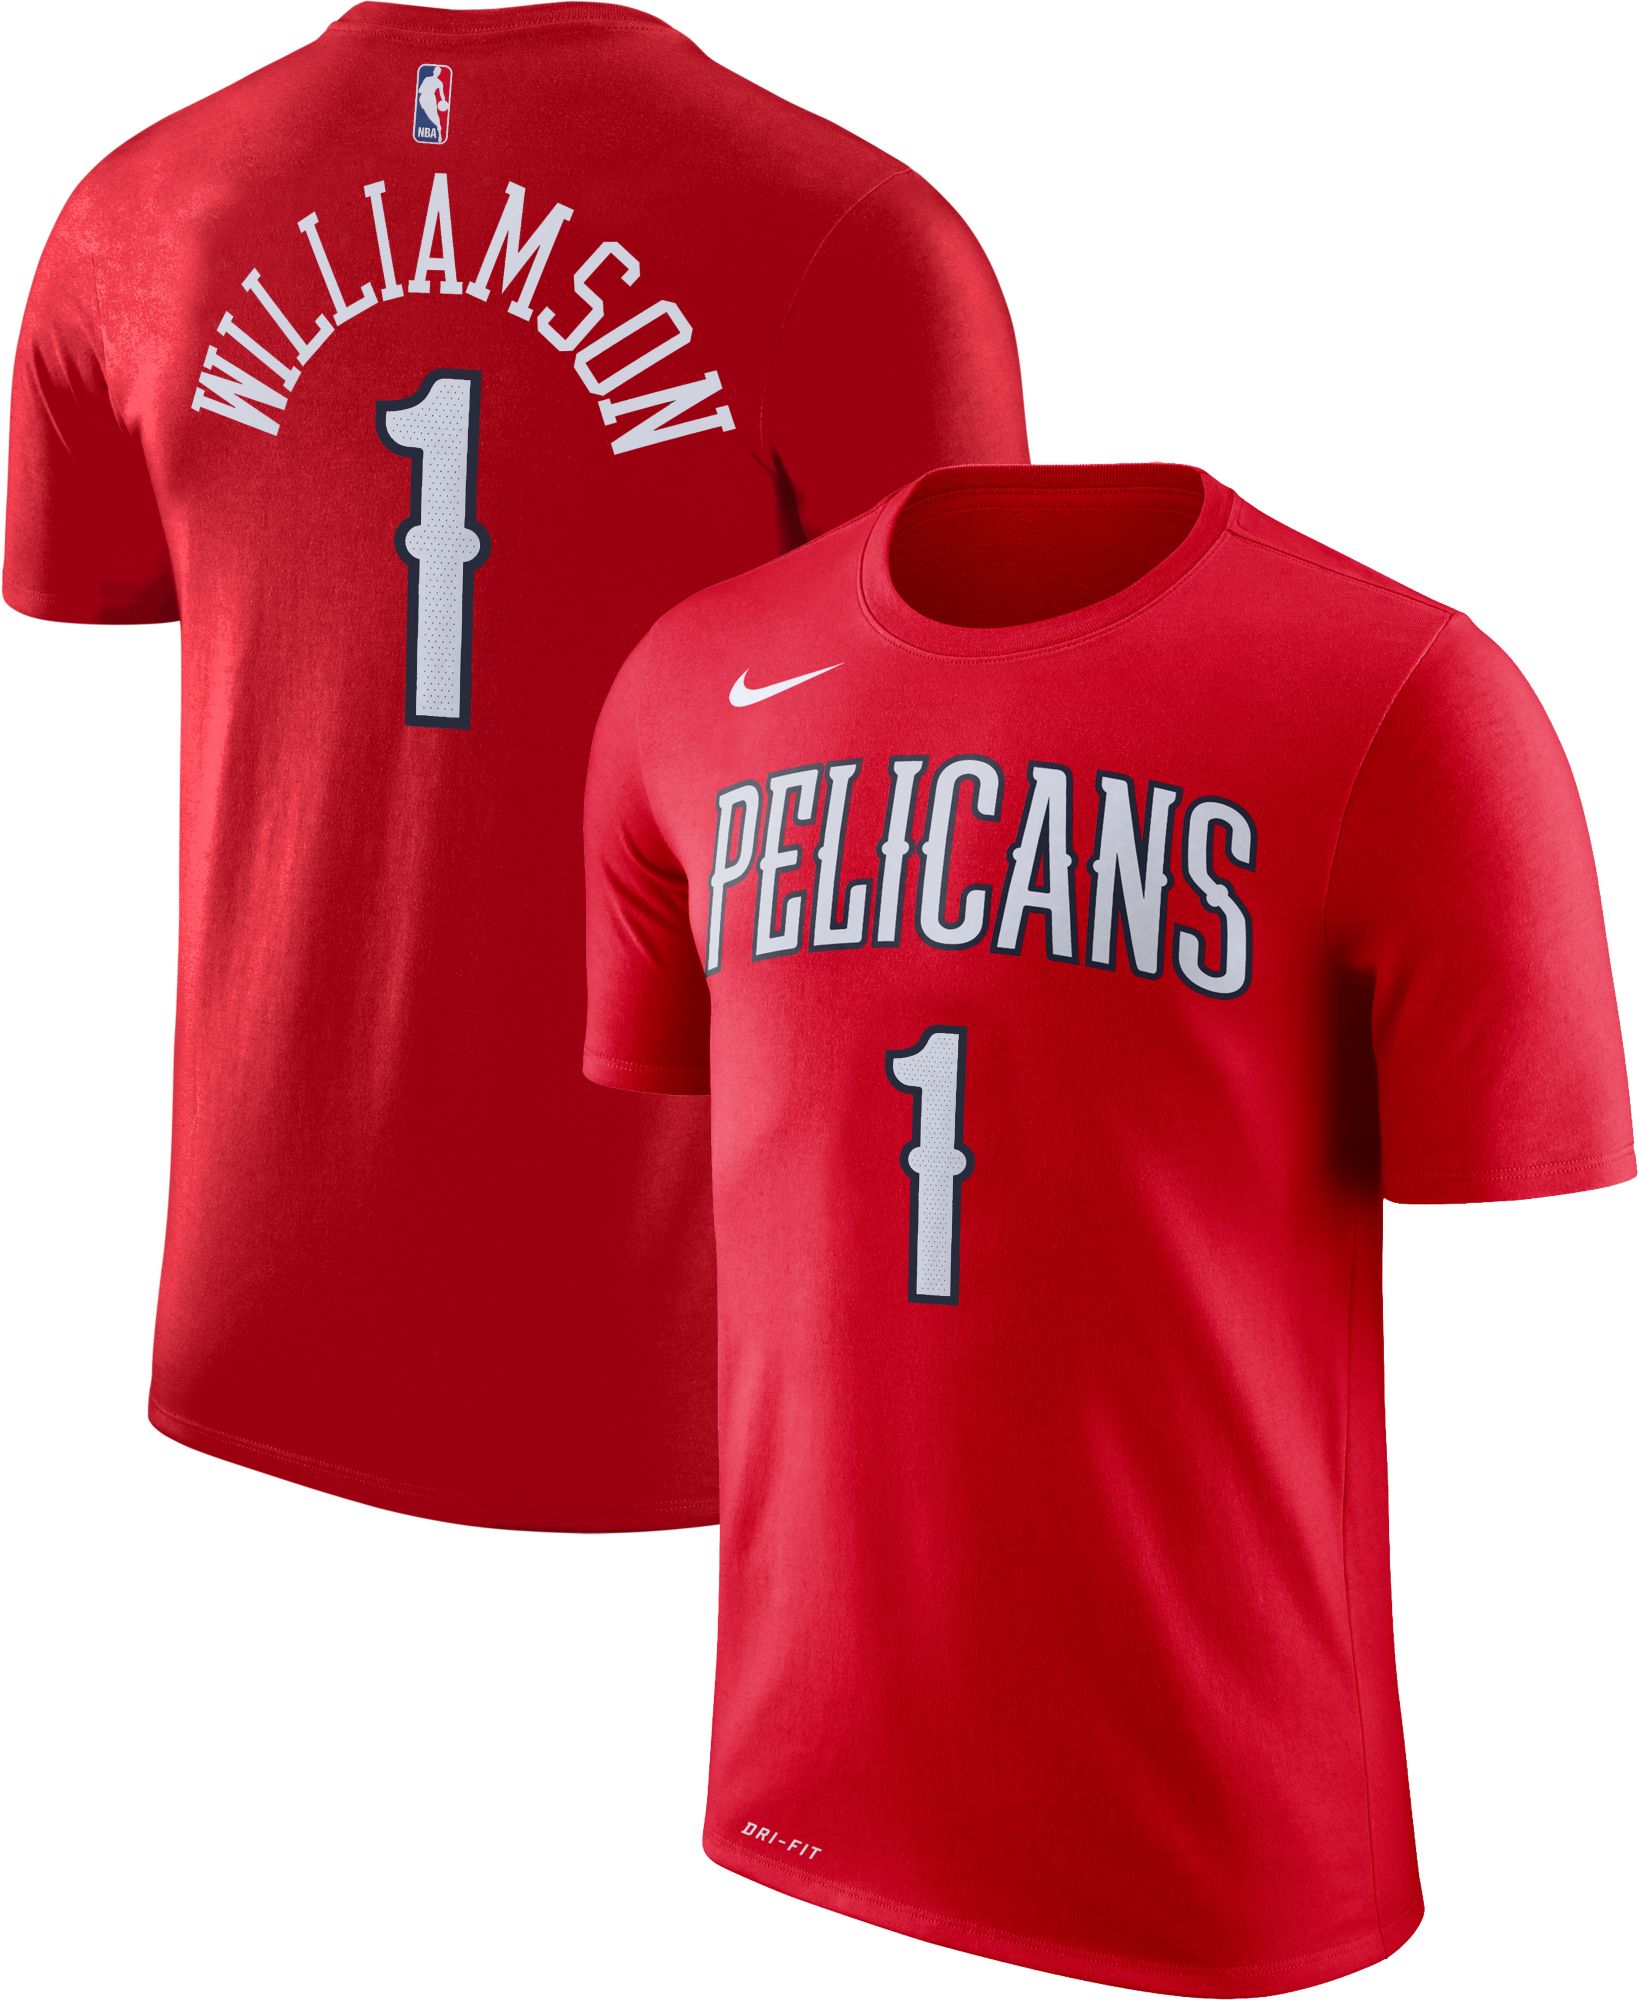 zion williamson red pelicans jersey